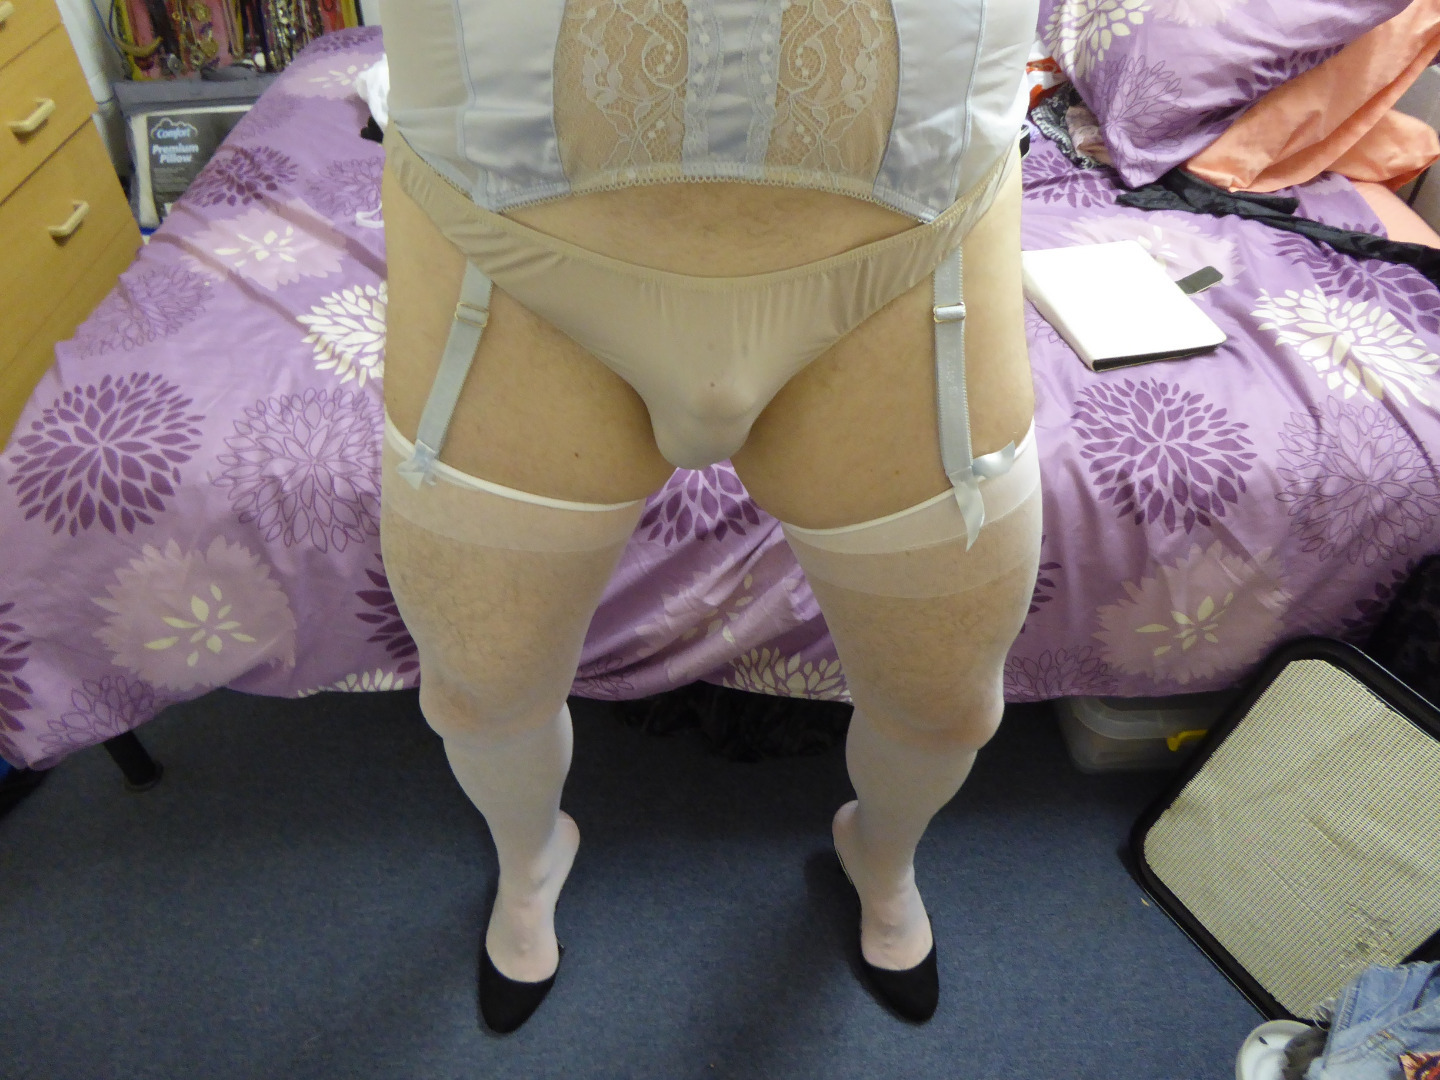 kari sweets dat ass and underboob fine hotties hot #crossdress #crossdresser #crossdressing #heels #panties #sissy #stockings